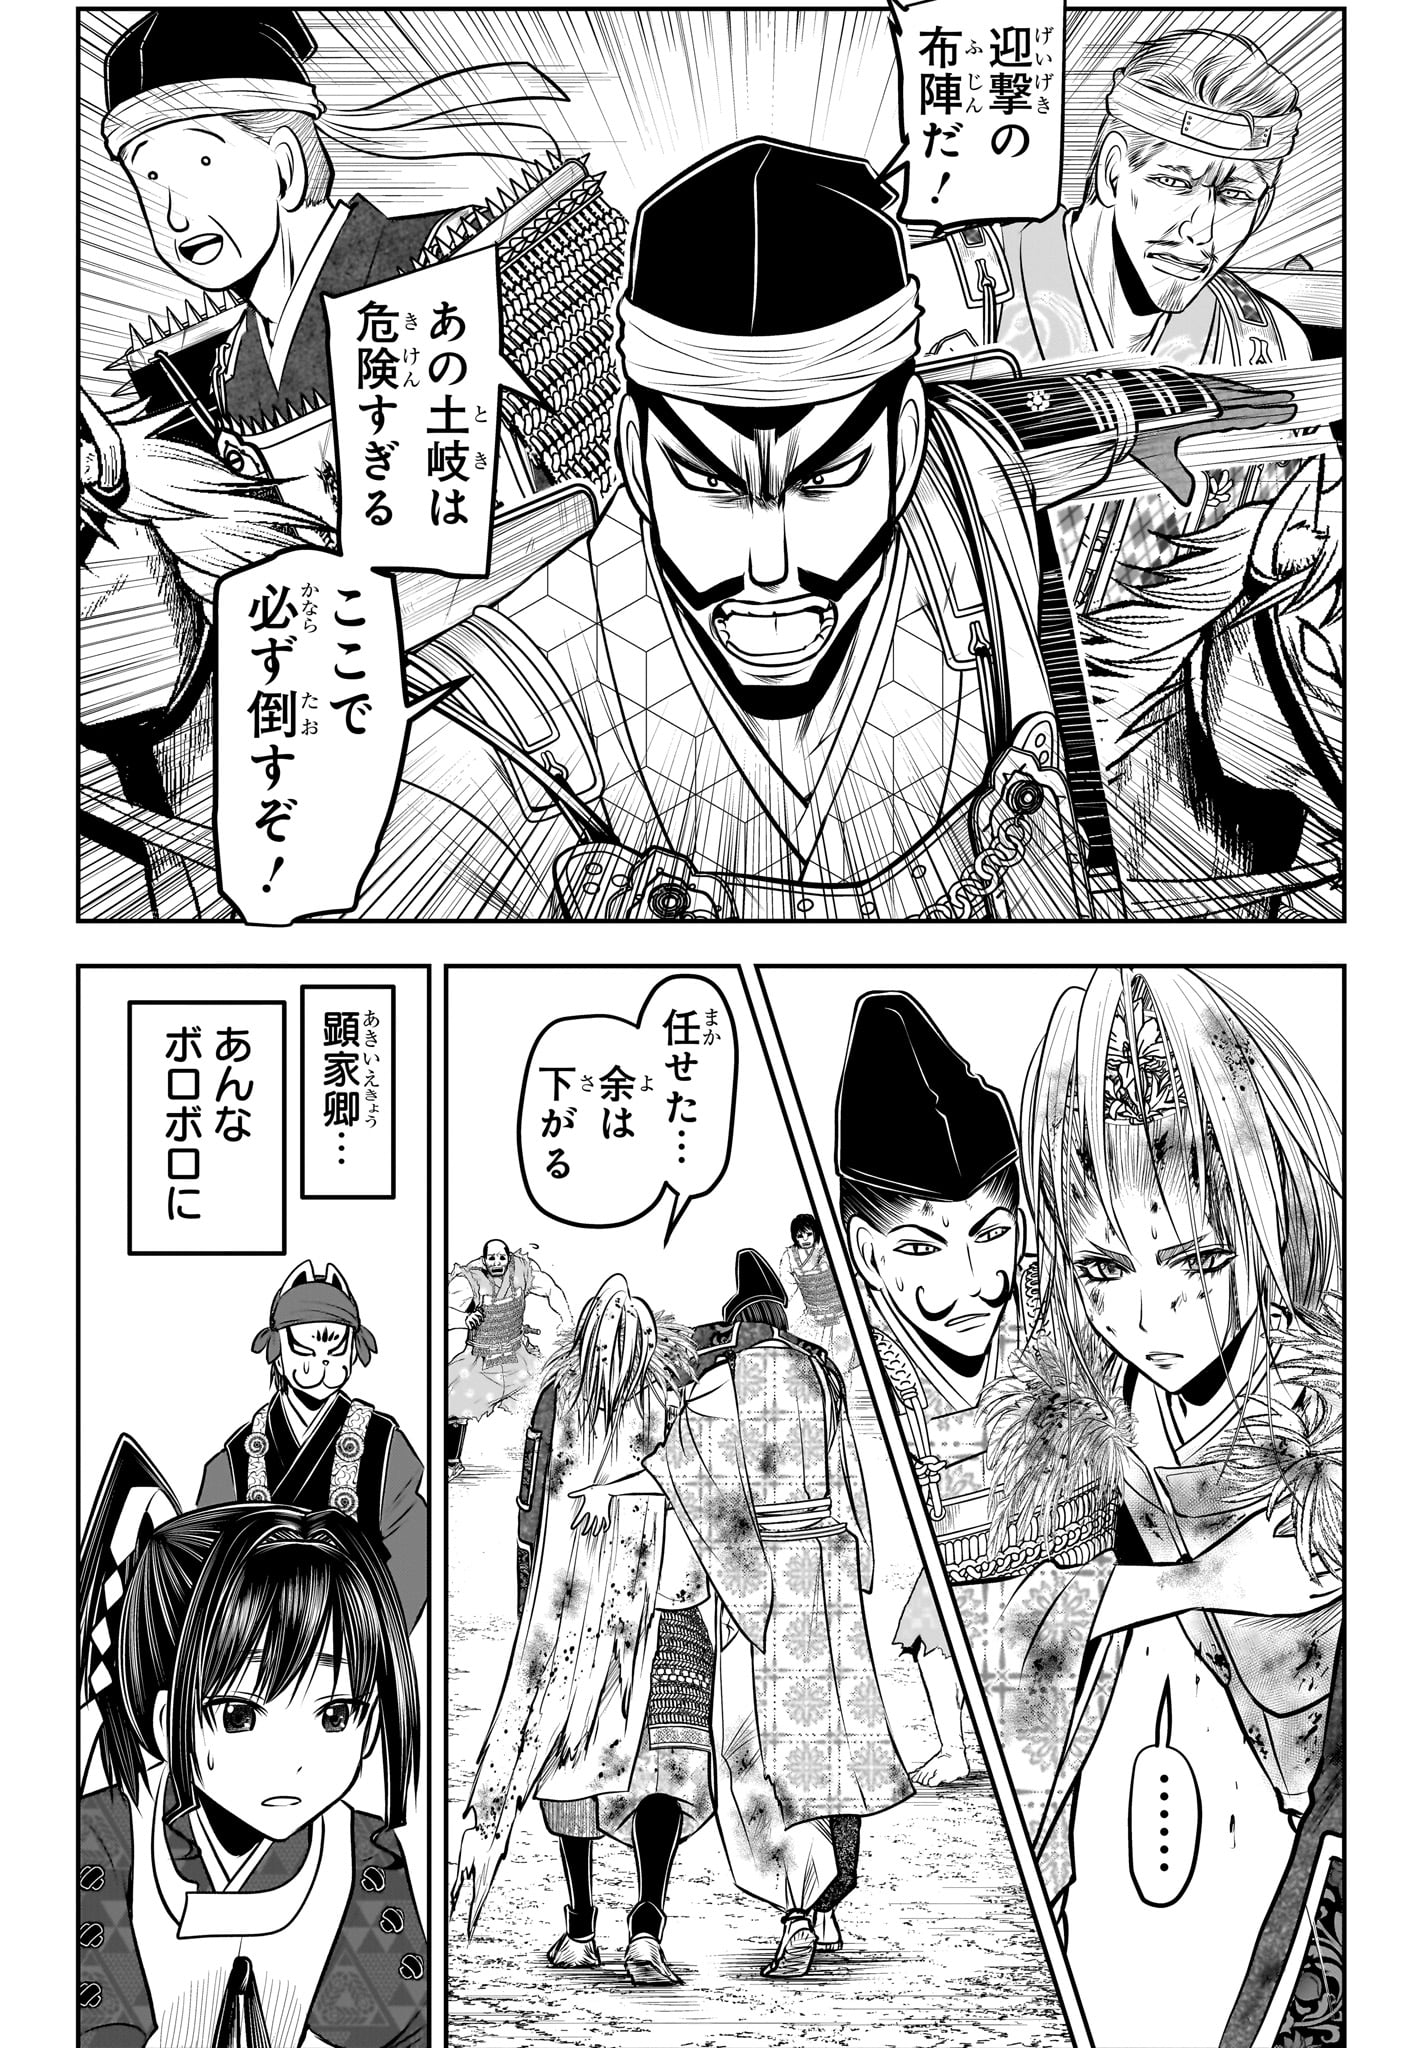 Nige Jouzu no Wakagimi - Chapter 143 - Page 2